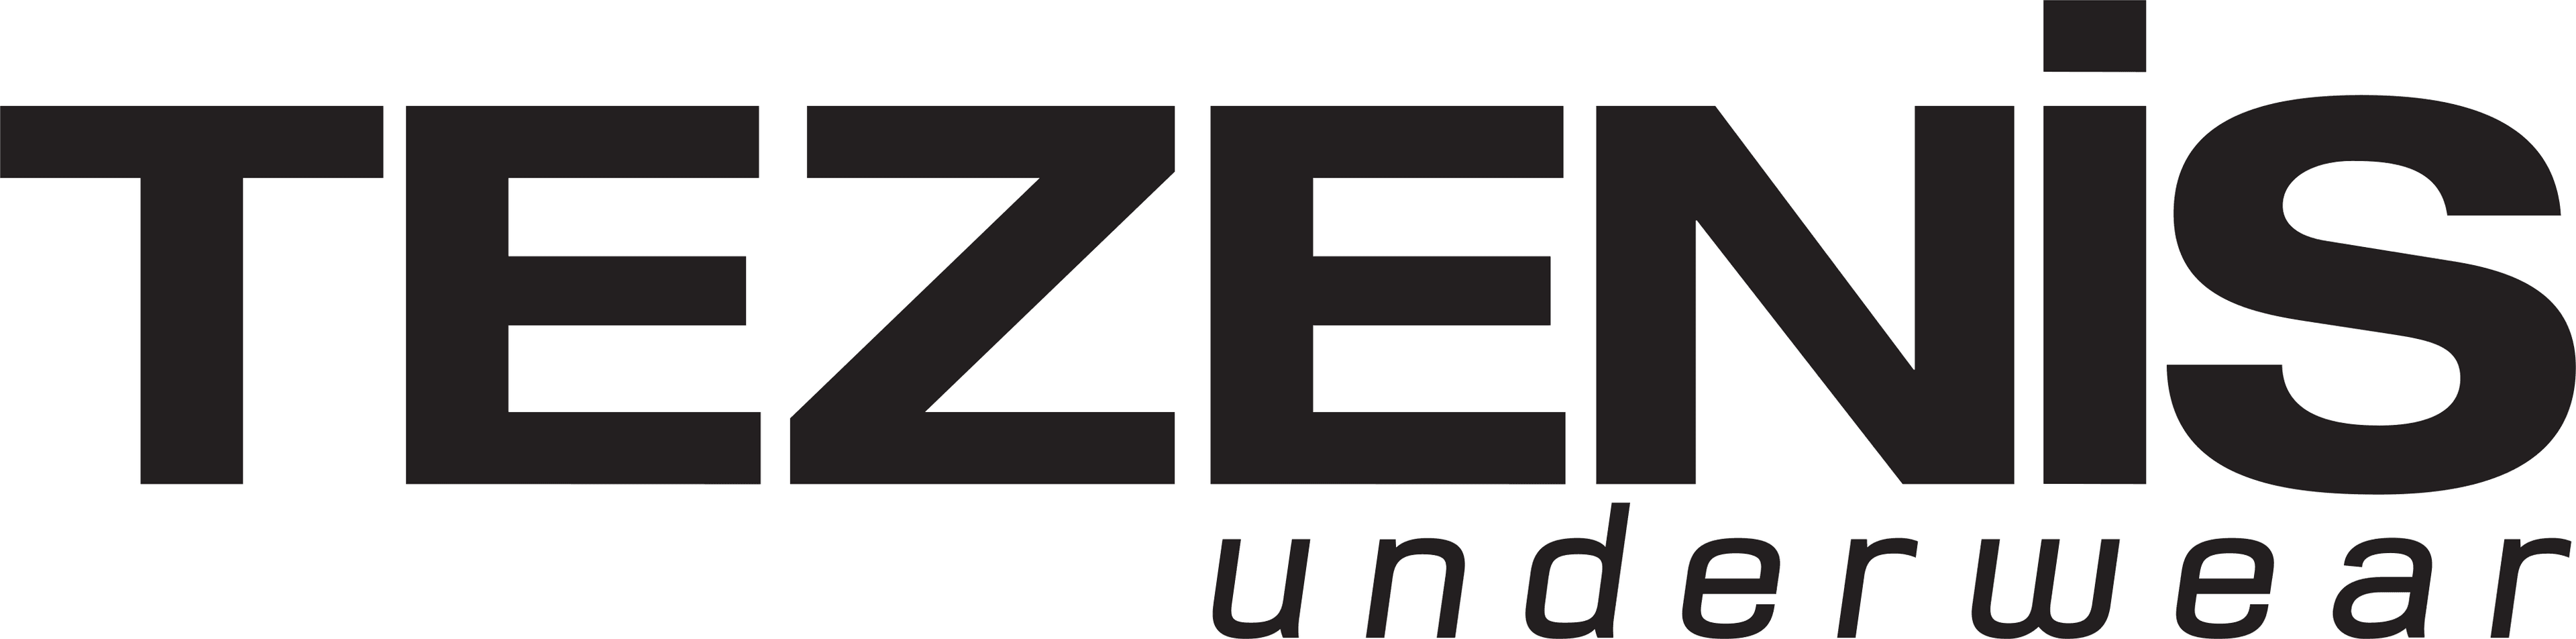 Logo Tezenis